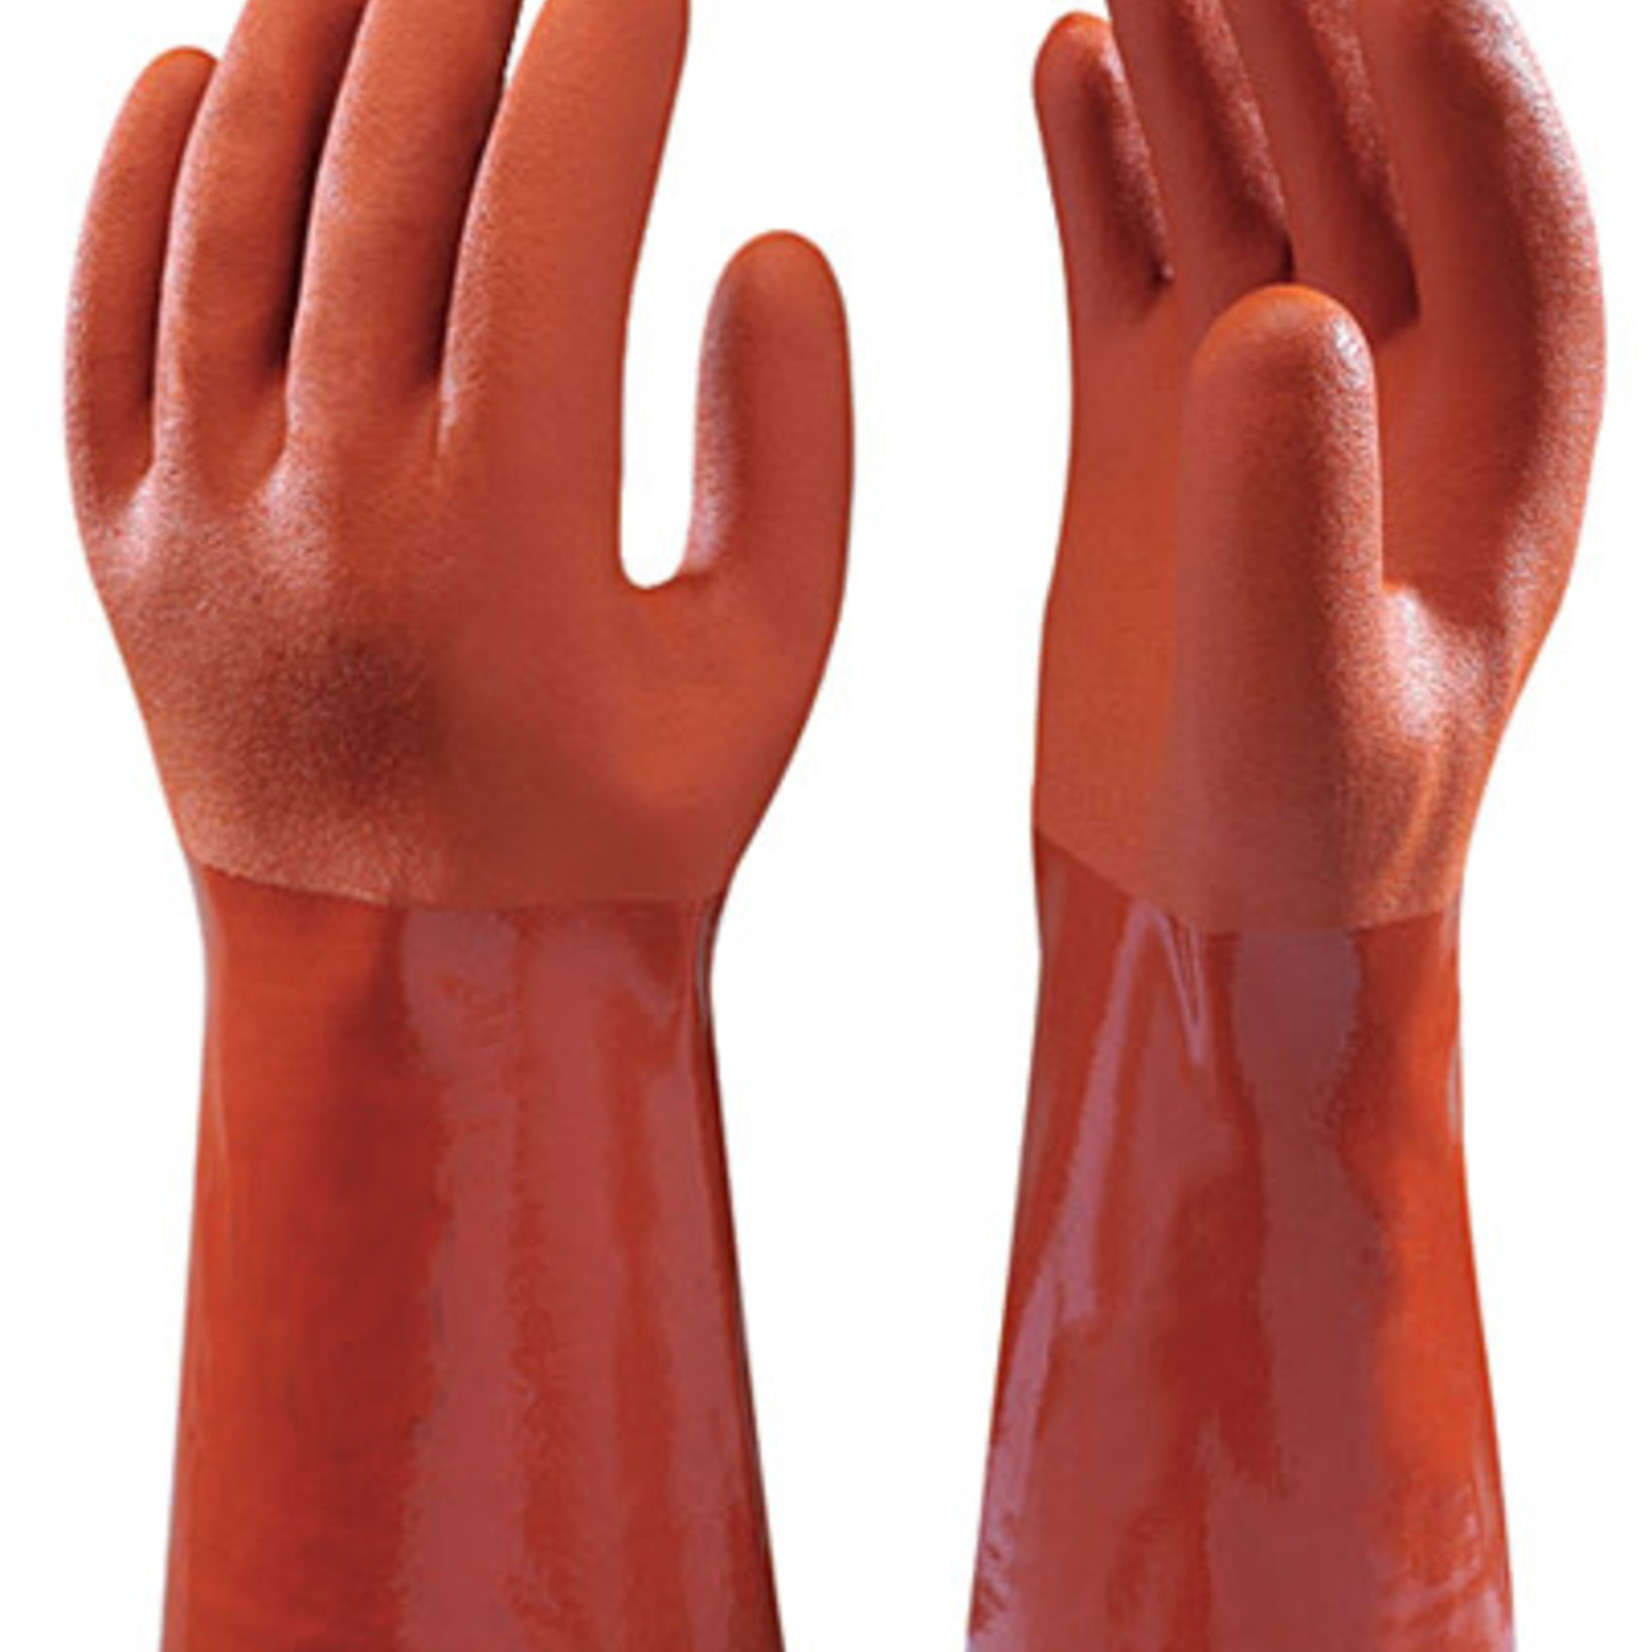 Atlas Gloves Atlas Glove 620 Orange PVC